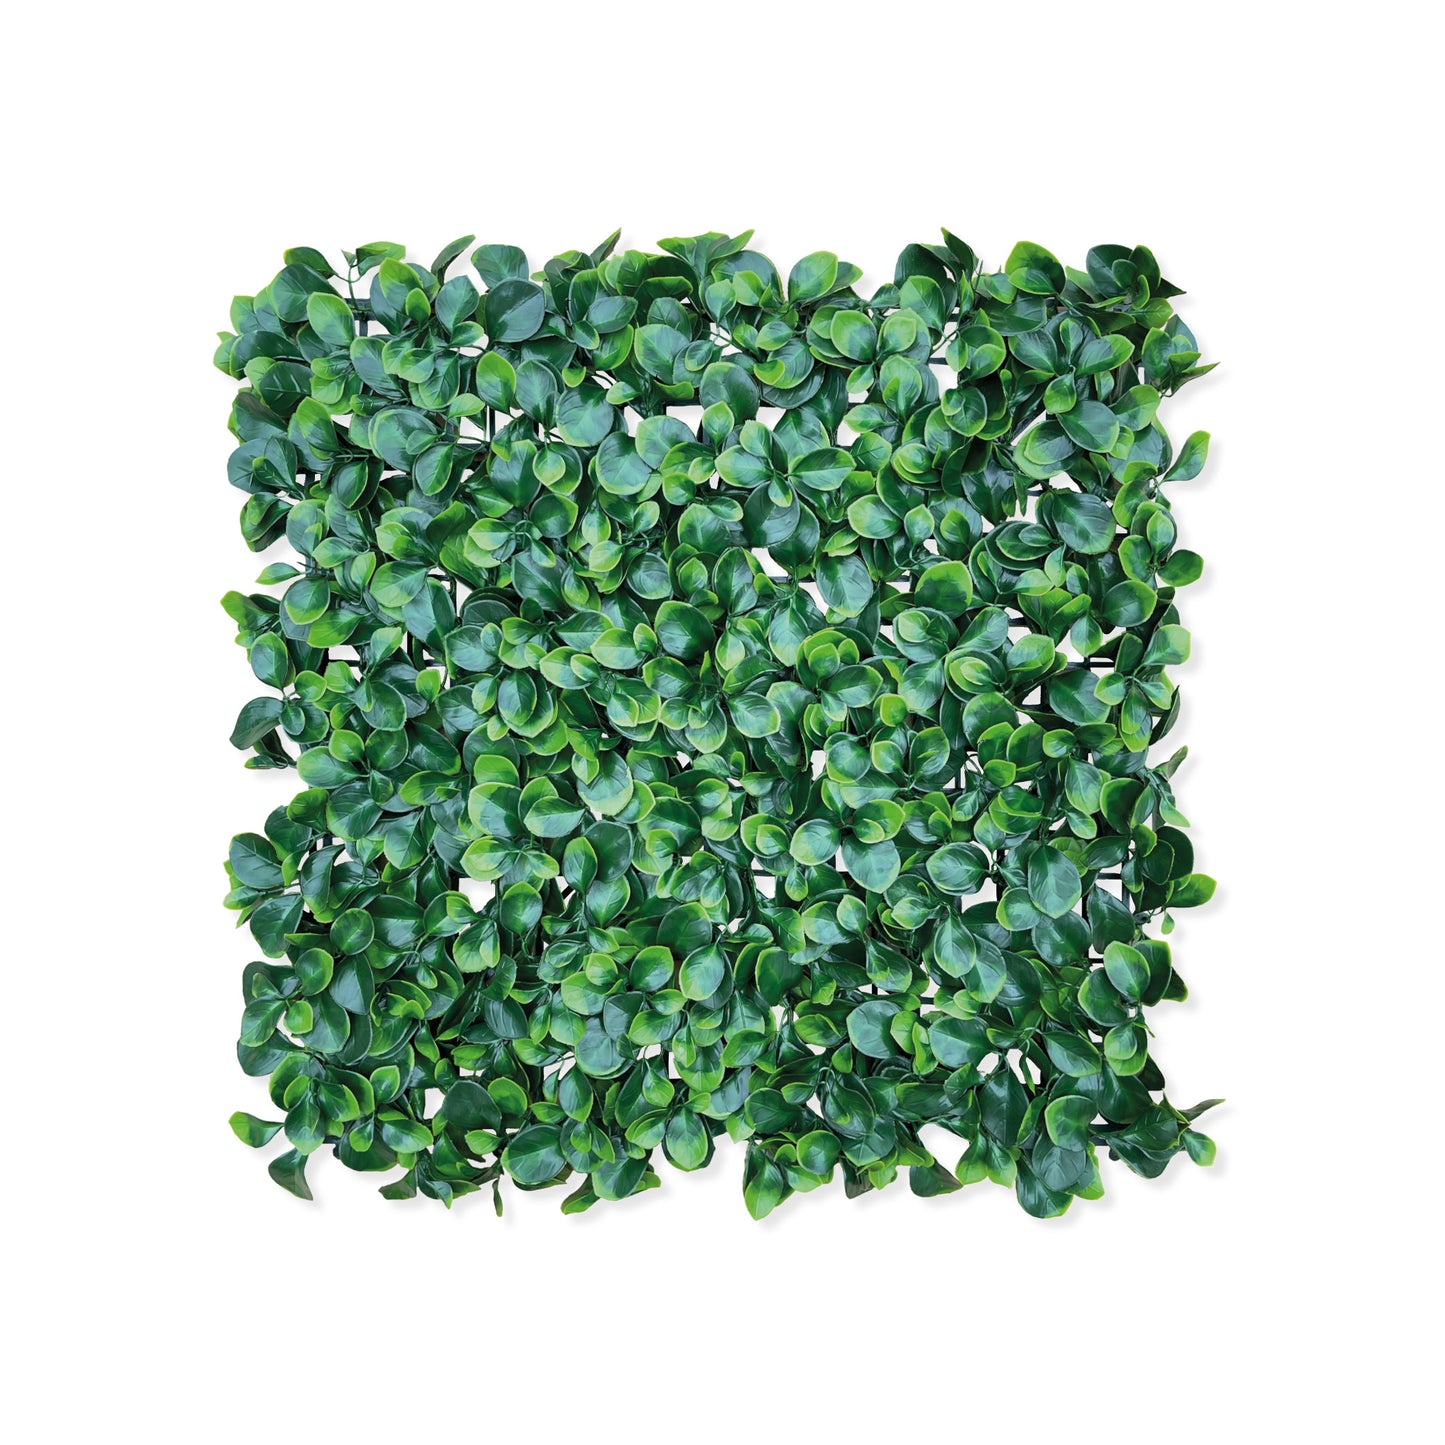 Pflanzenpanel "GREEN PIECE" aus Realtouch Kunstpflanzen